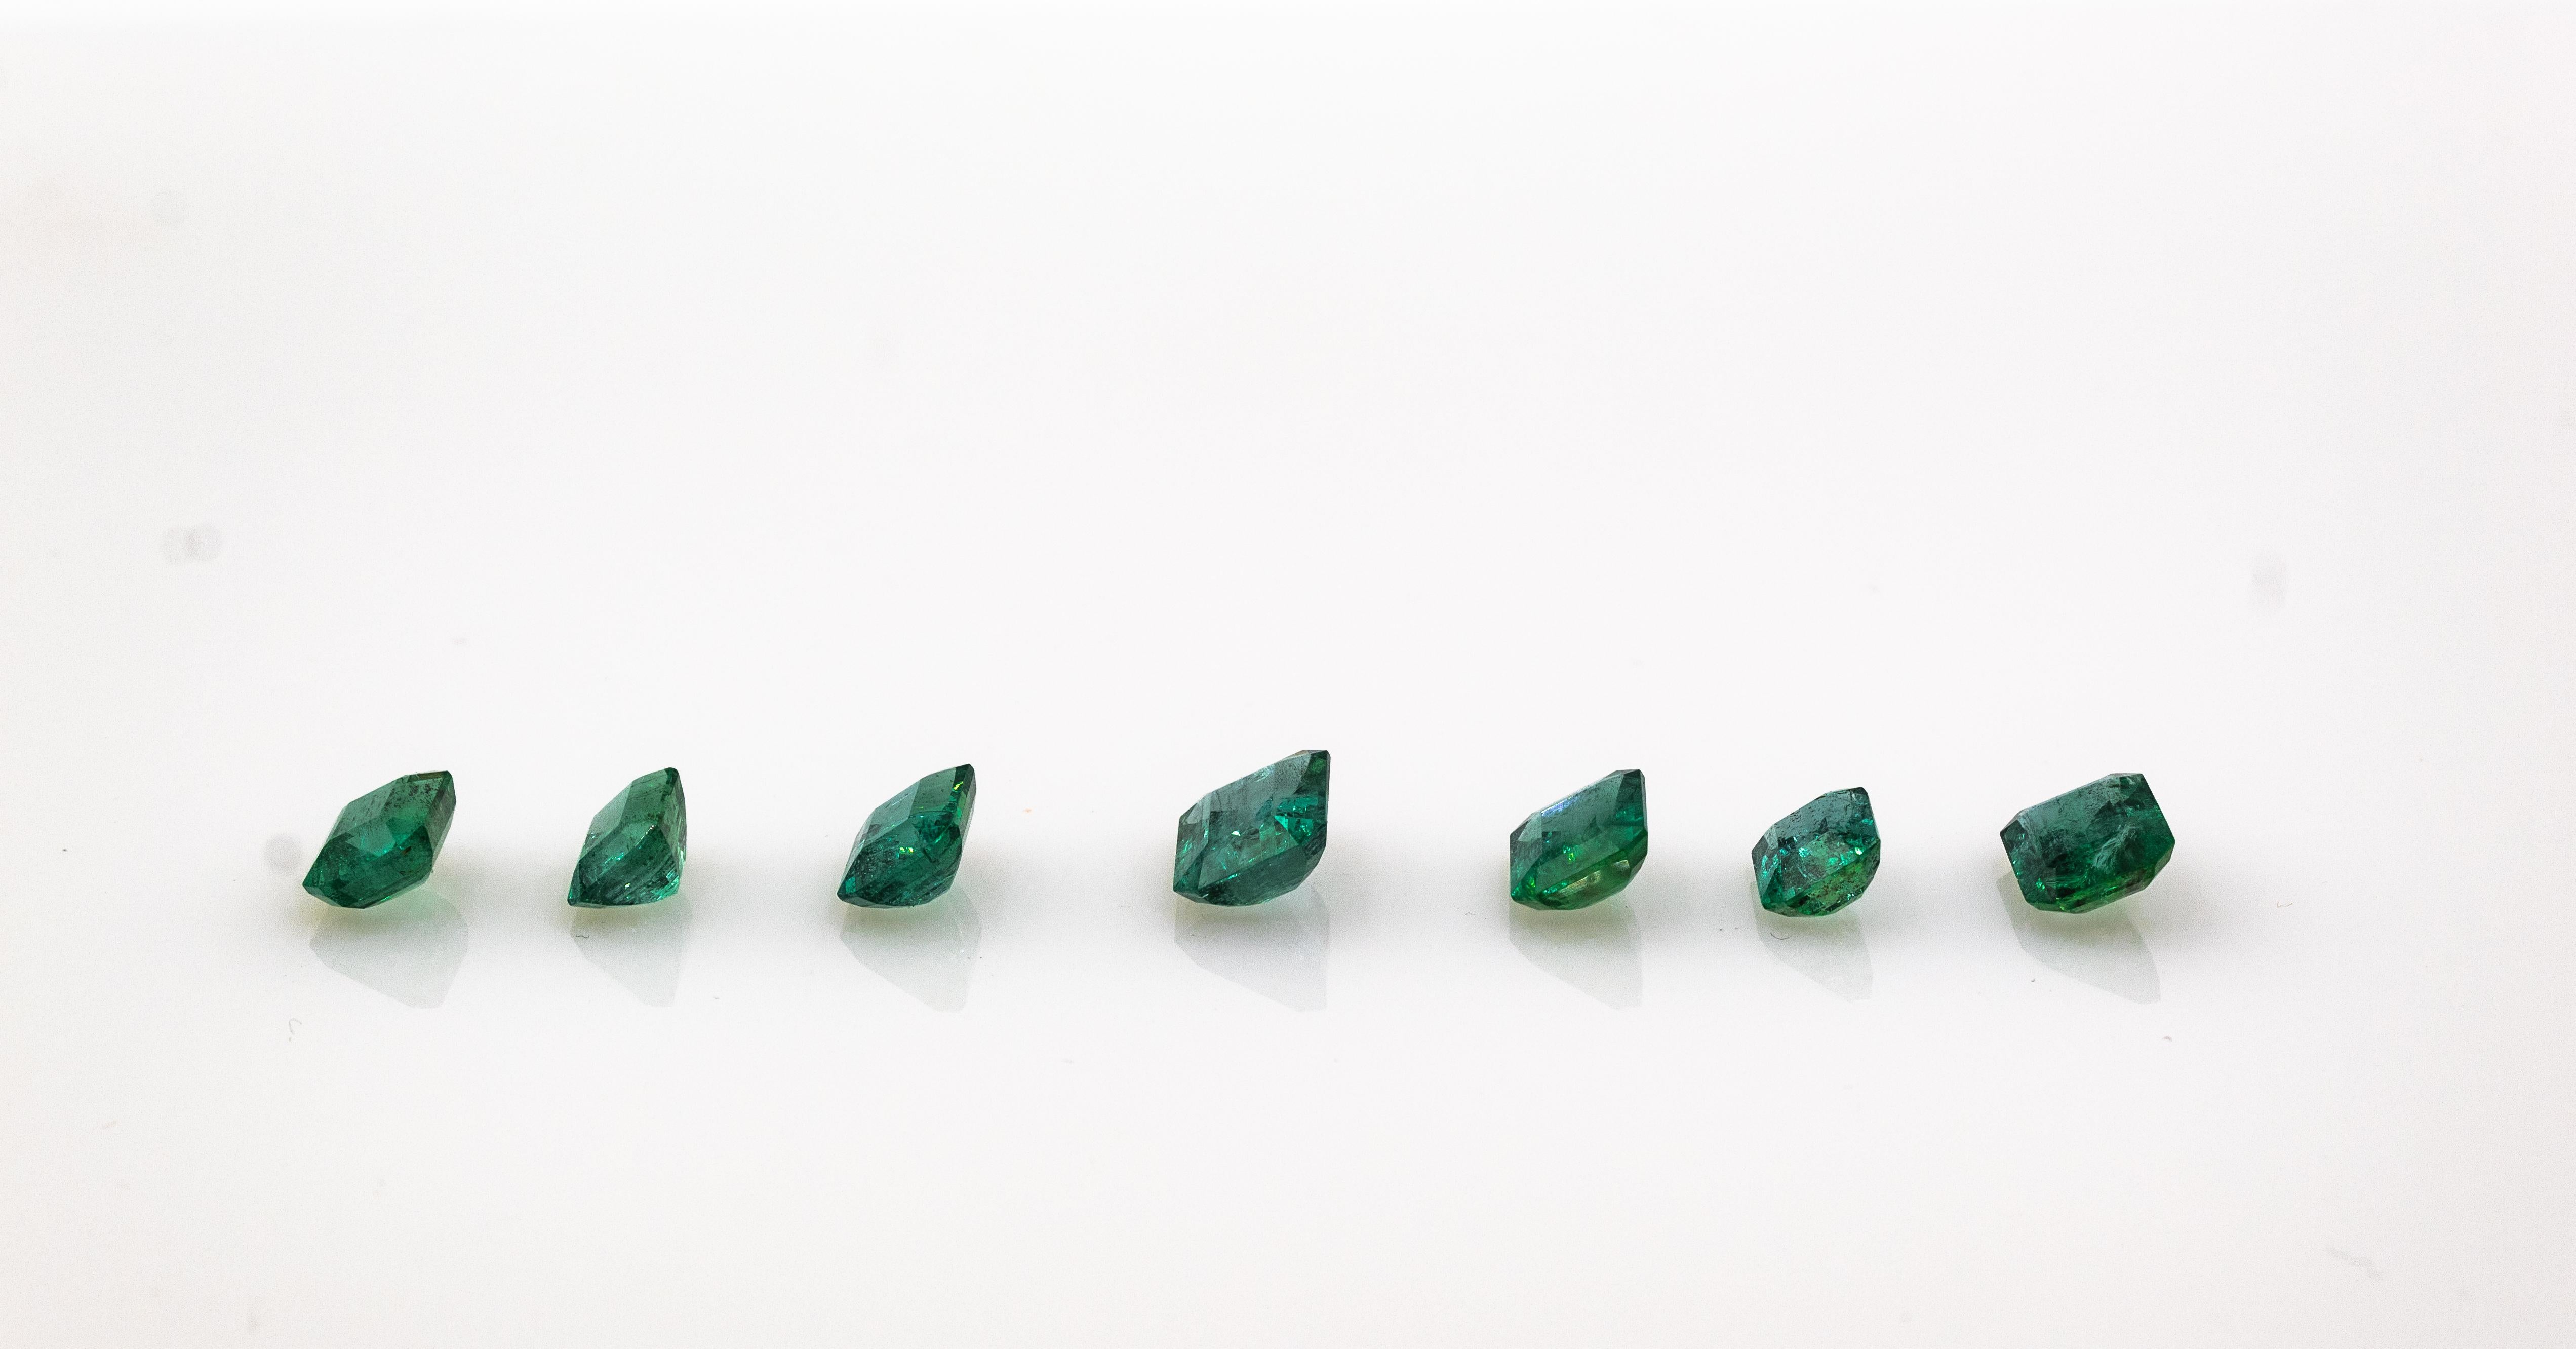 Certifiable Zambia Octagon Cut 4.18 Carat Emerald Loose Gemstone 4